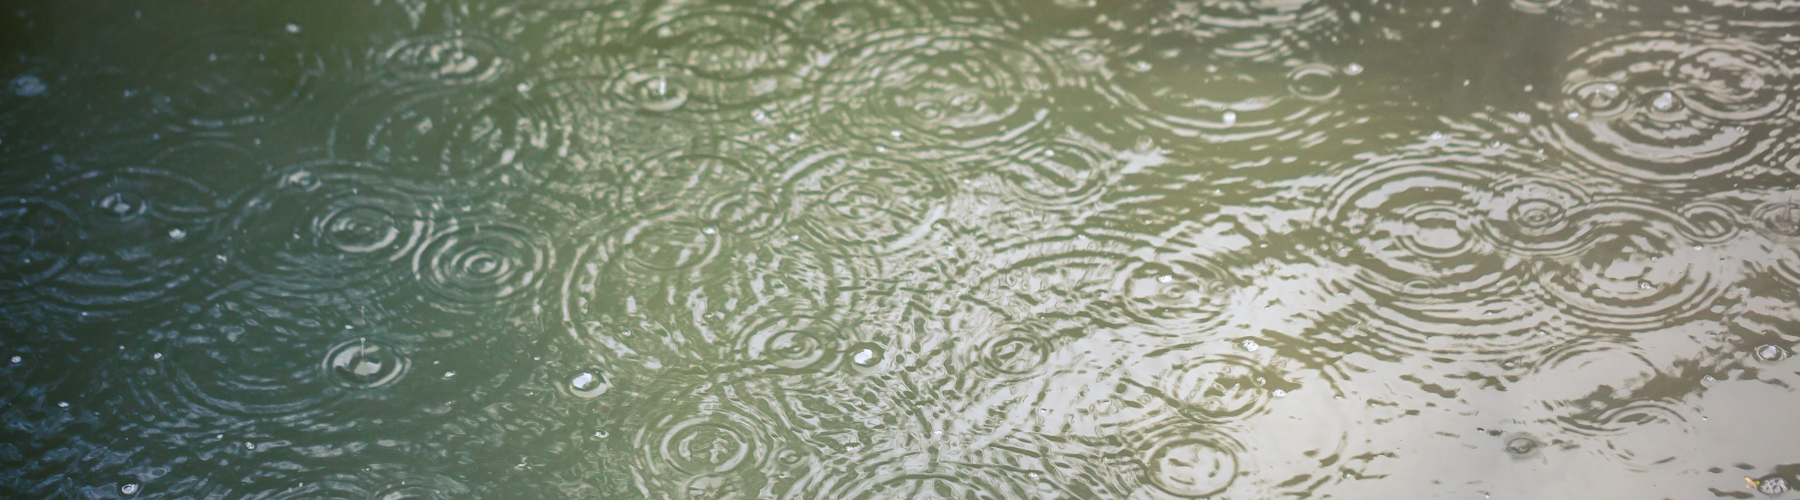 Raindrops on water